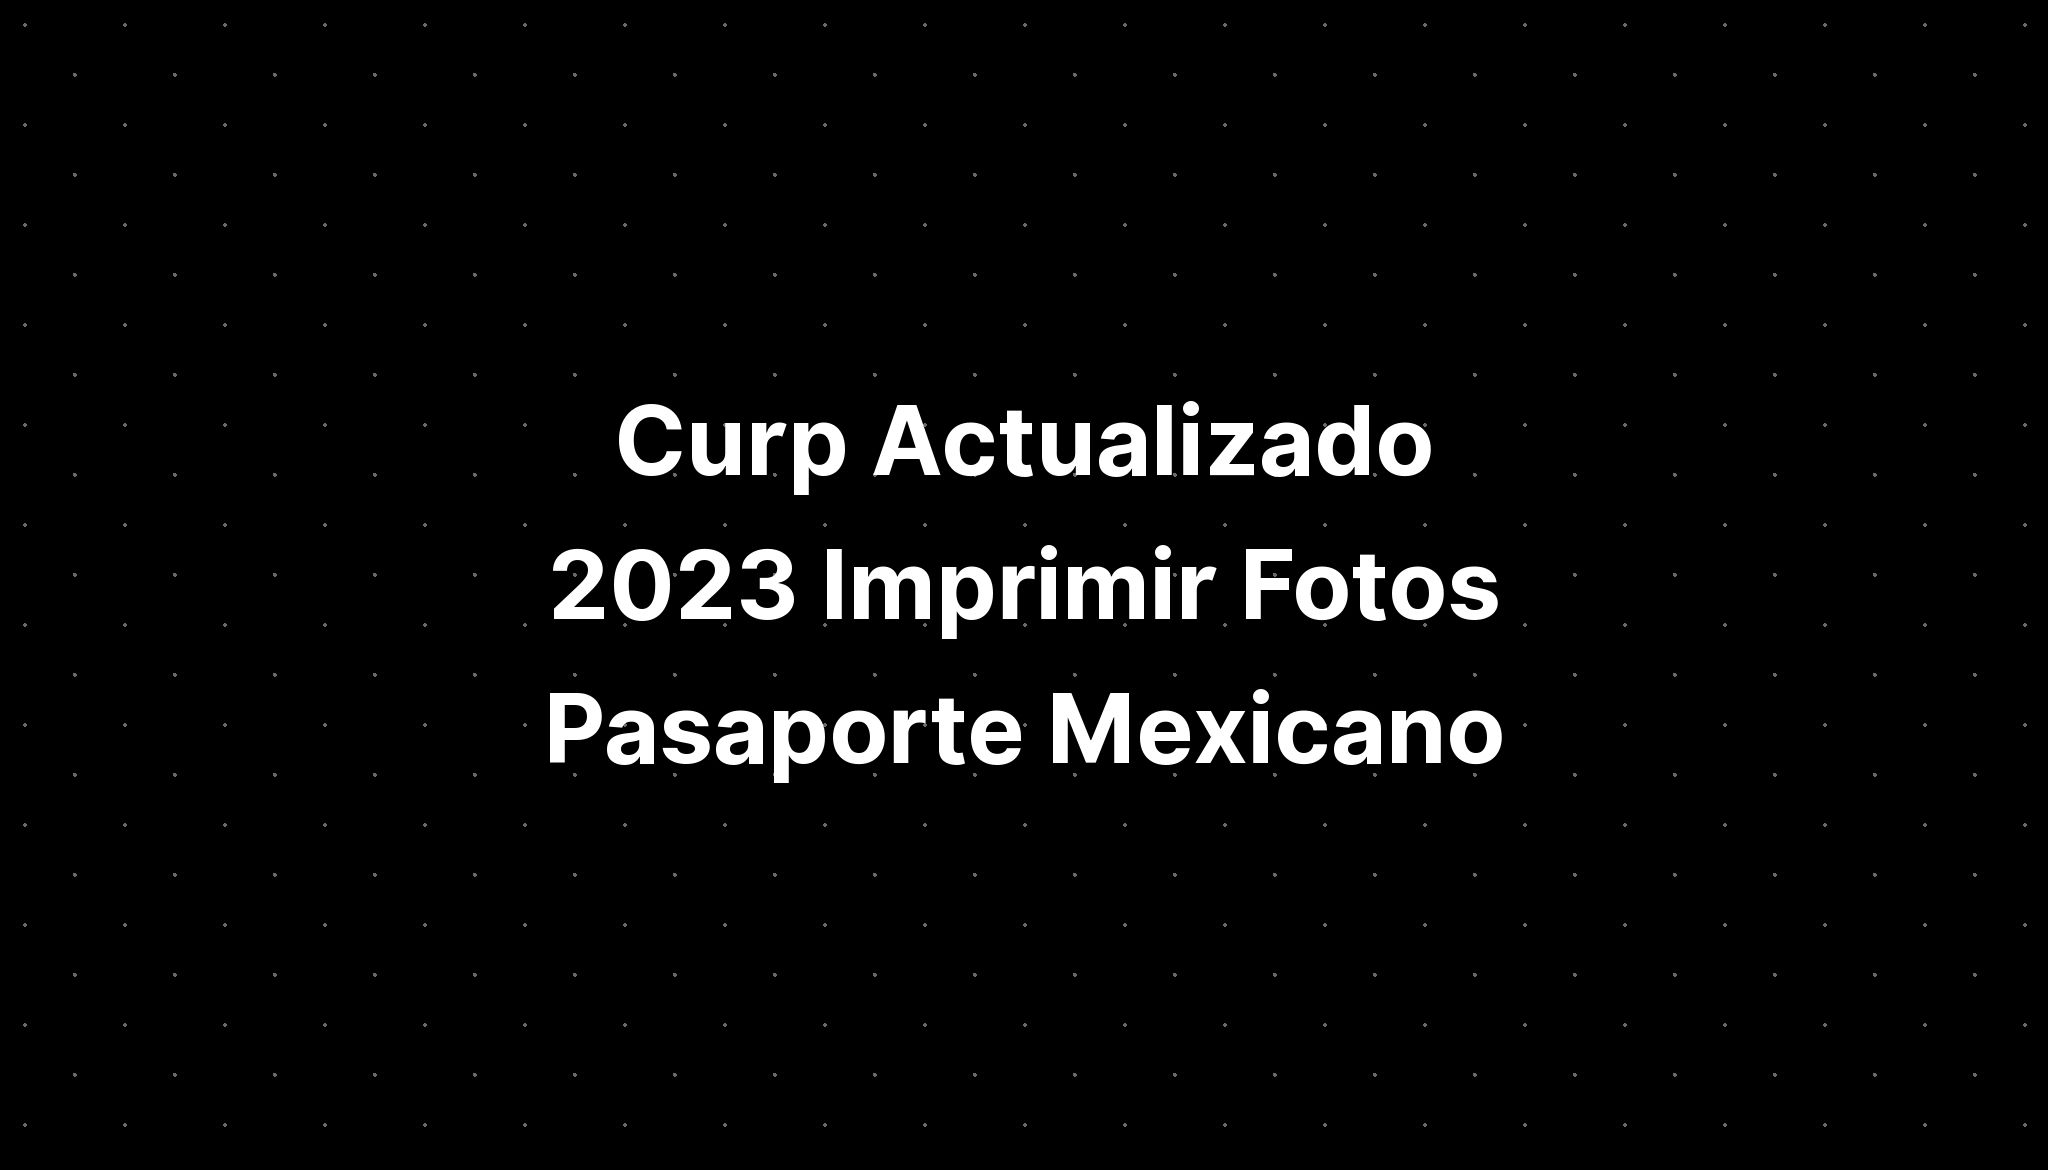 Curp Actualizado 2023 Imprimir Fotos Pasaporte Mexicano Imagesee 0990